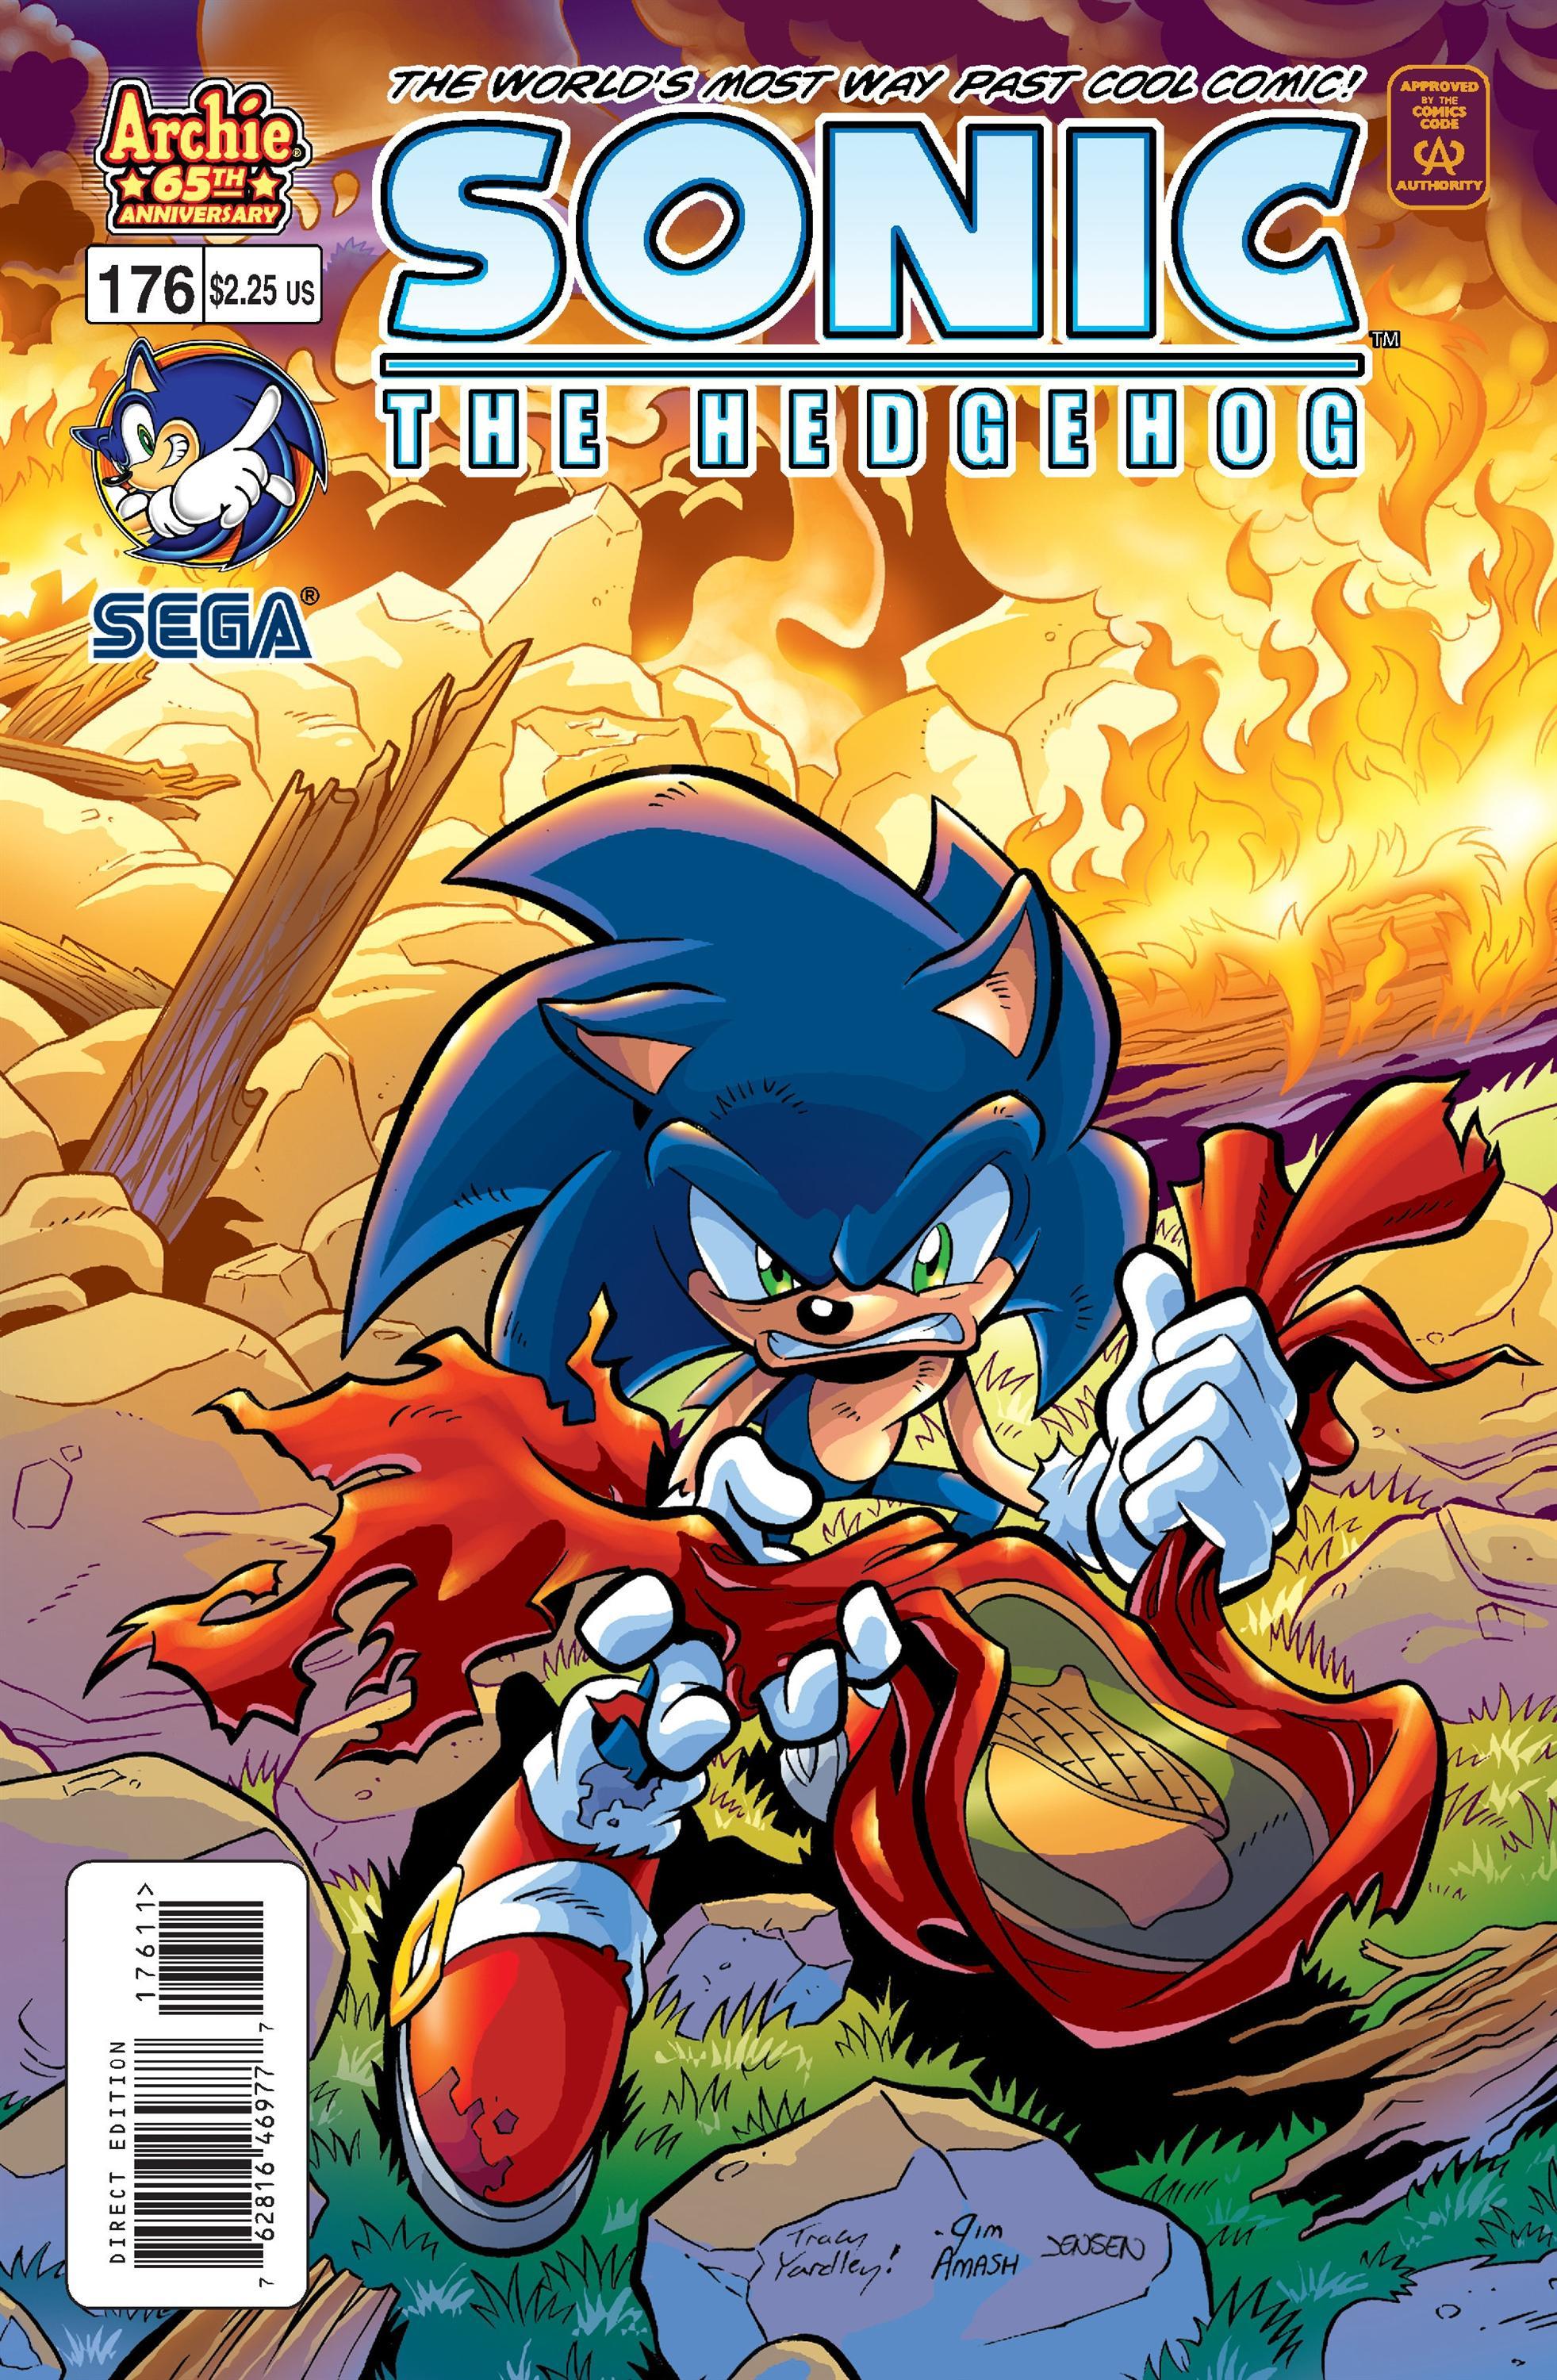 Archie Sonic the Hedgehog Issue 176 Mobius Encyclopaedia Fandom